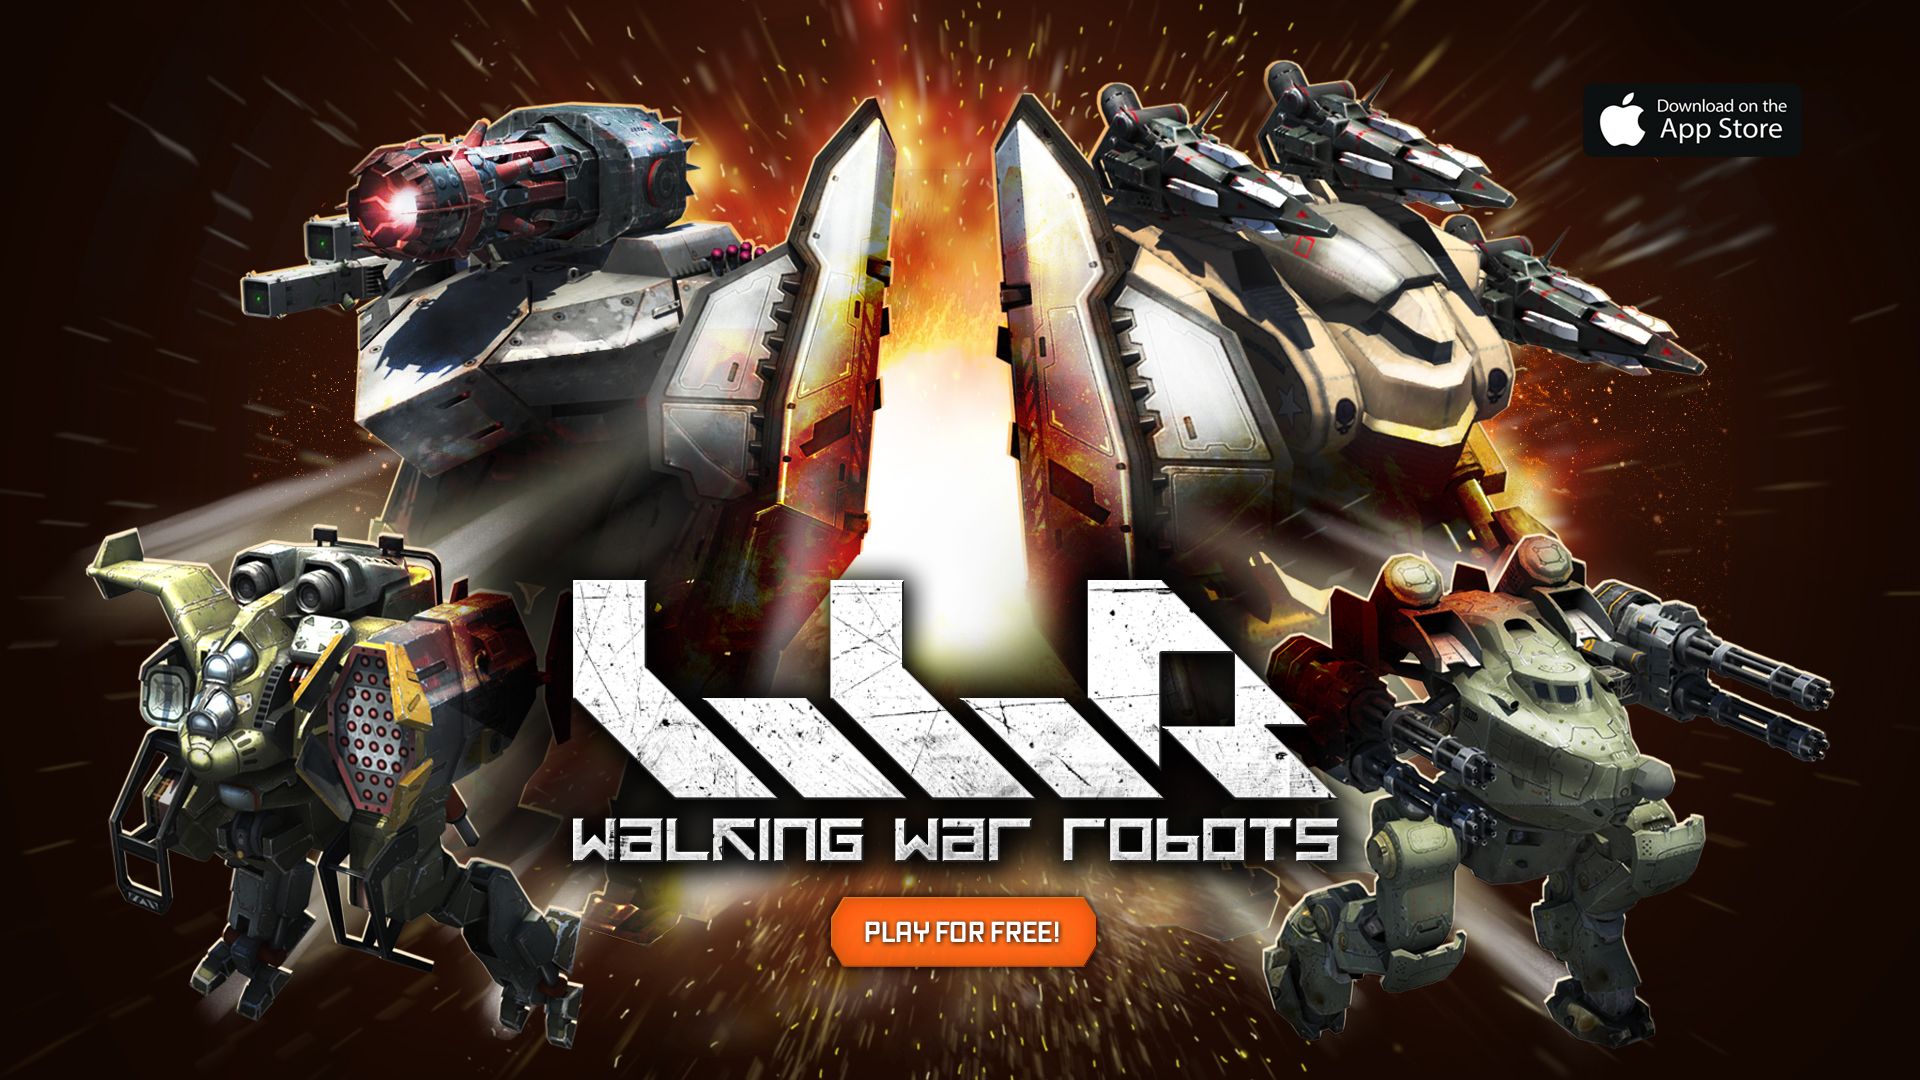 Walking War Robots 1080P HD Game Wallpaper